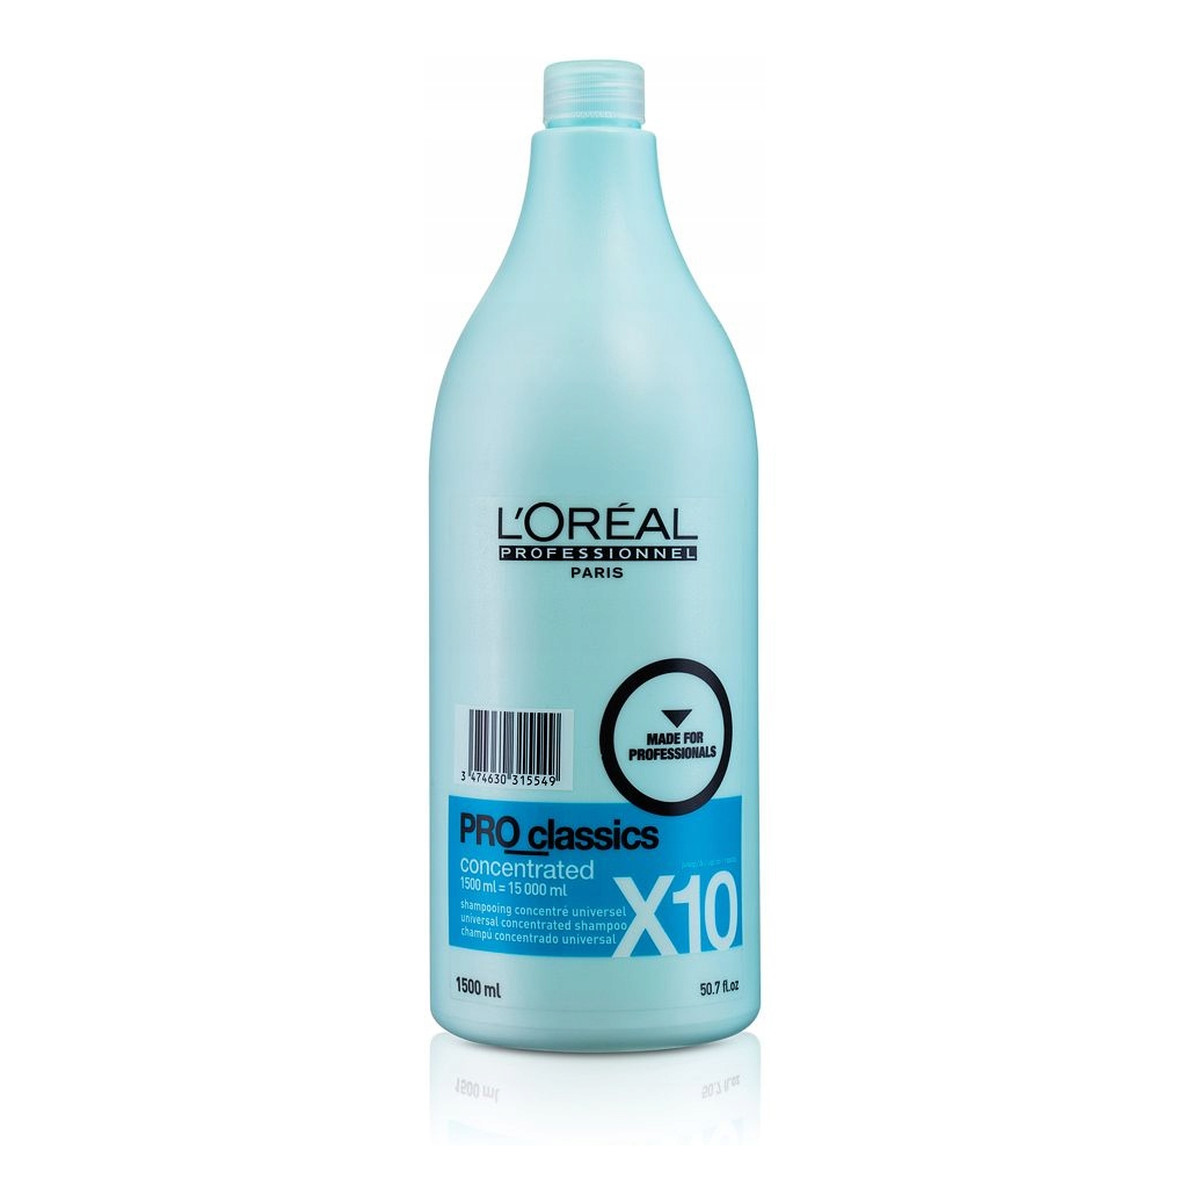 L'Oreal Paris Pro Classics Concentrated koncentrat szamponu 1500ml